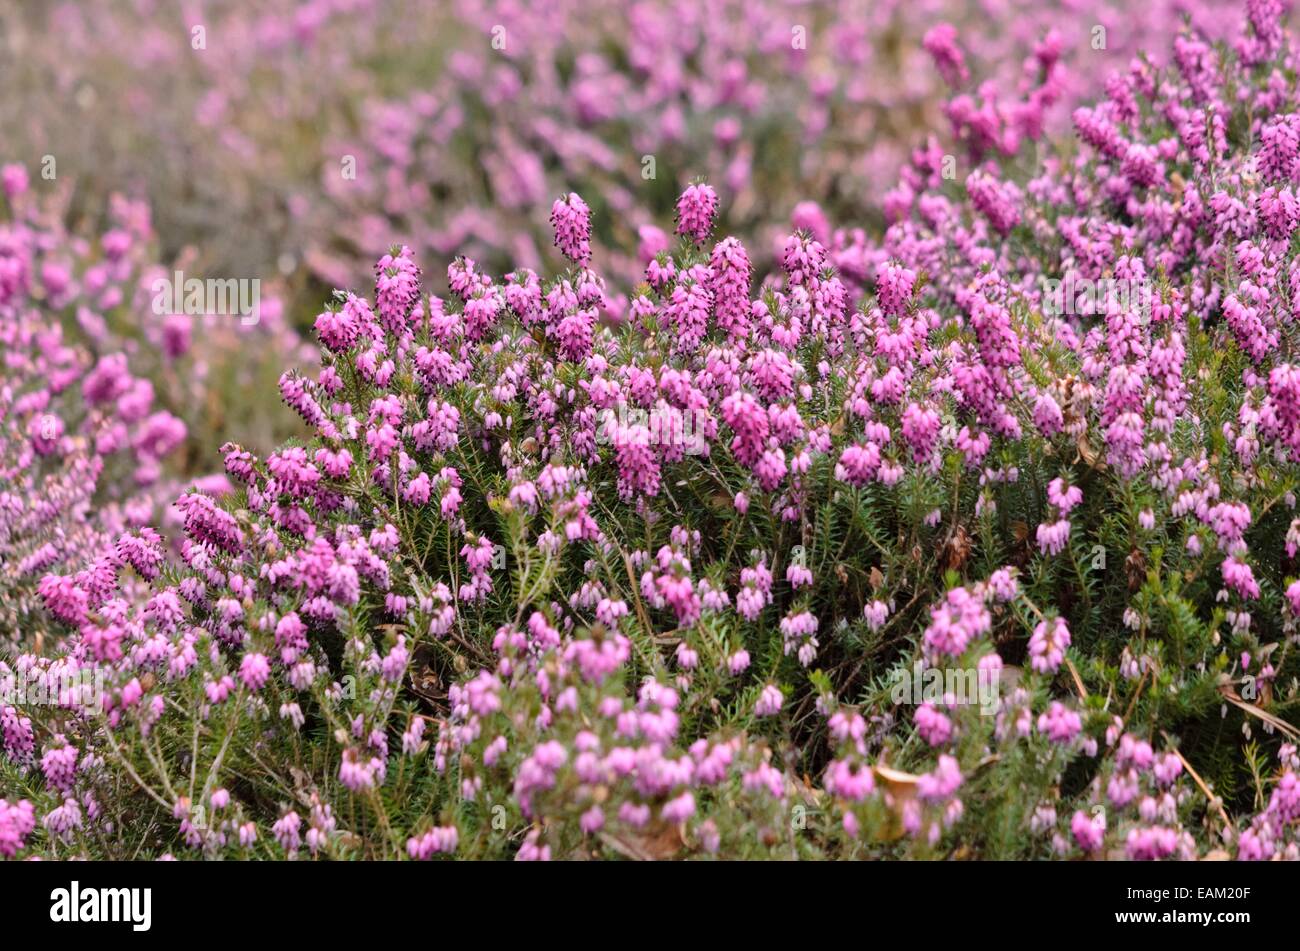 Winter heather (Erica carnea 'Winter Rubin' syn. Erica herbacea 'Winter Rubin') Stock Photo